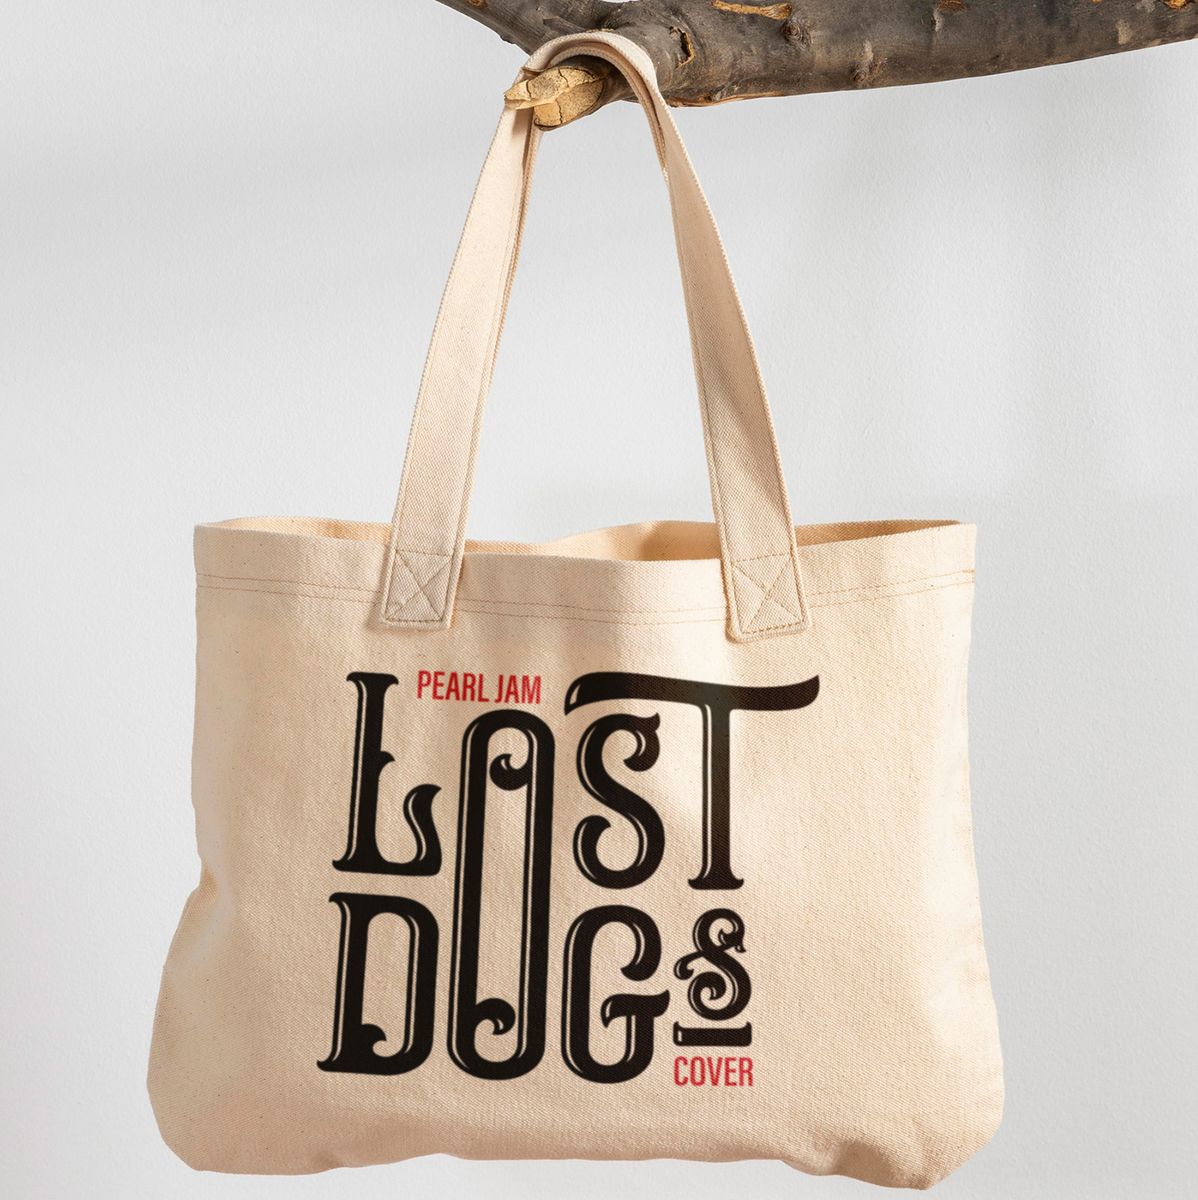 Nome do produto: ECO BAG - LOST DOGS - PEARL JAM COVER